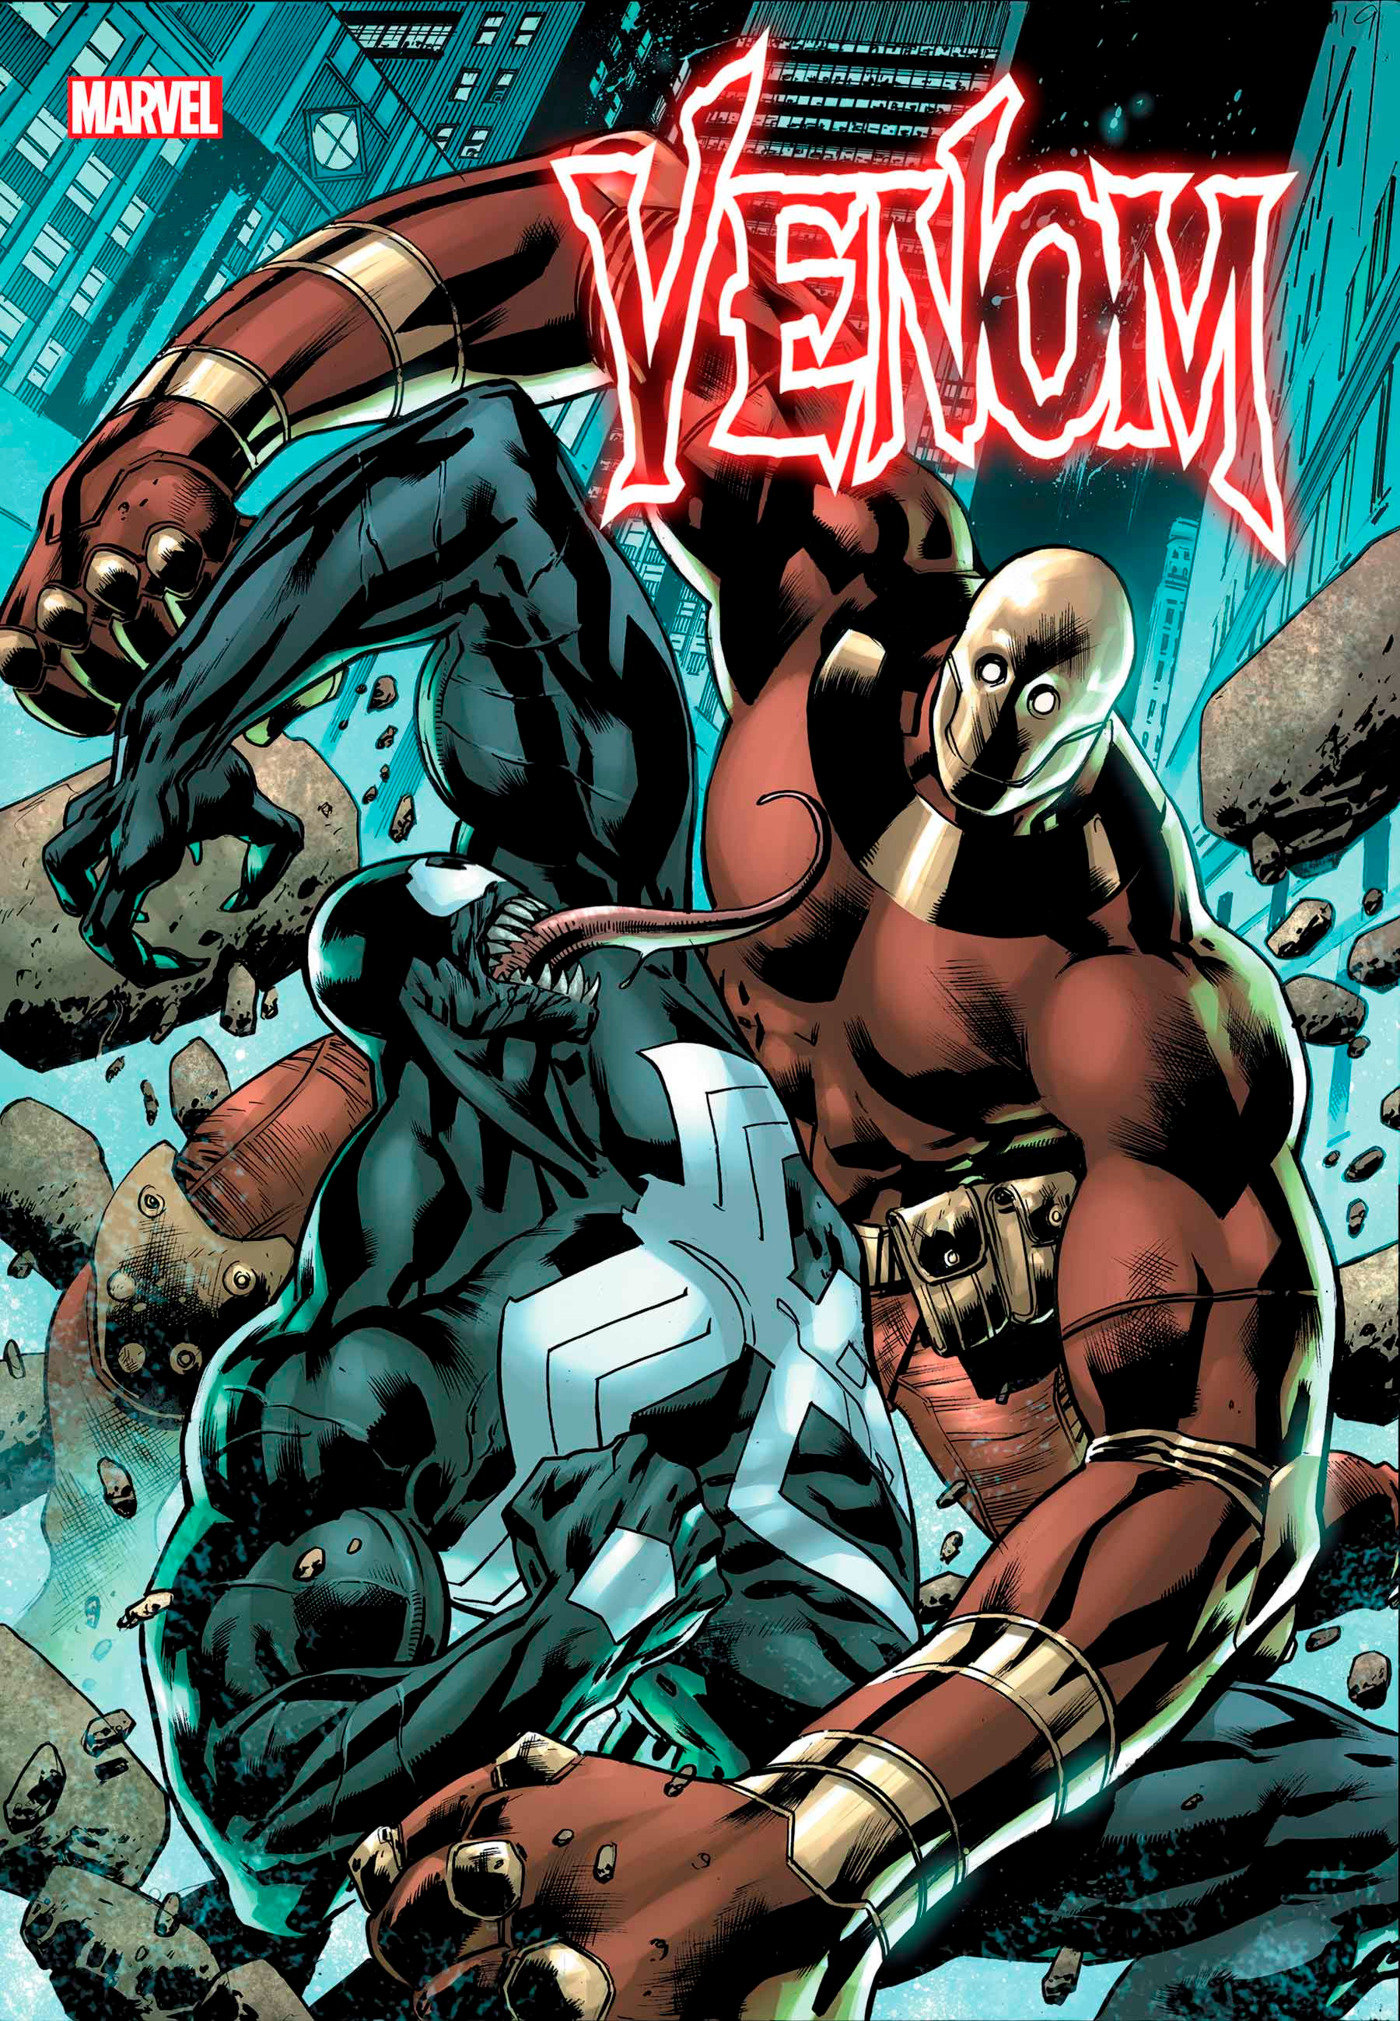 Venom #19 (2021)